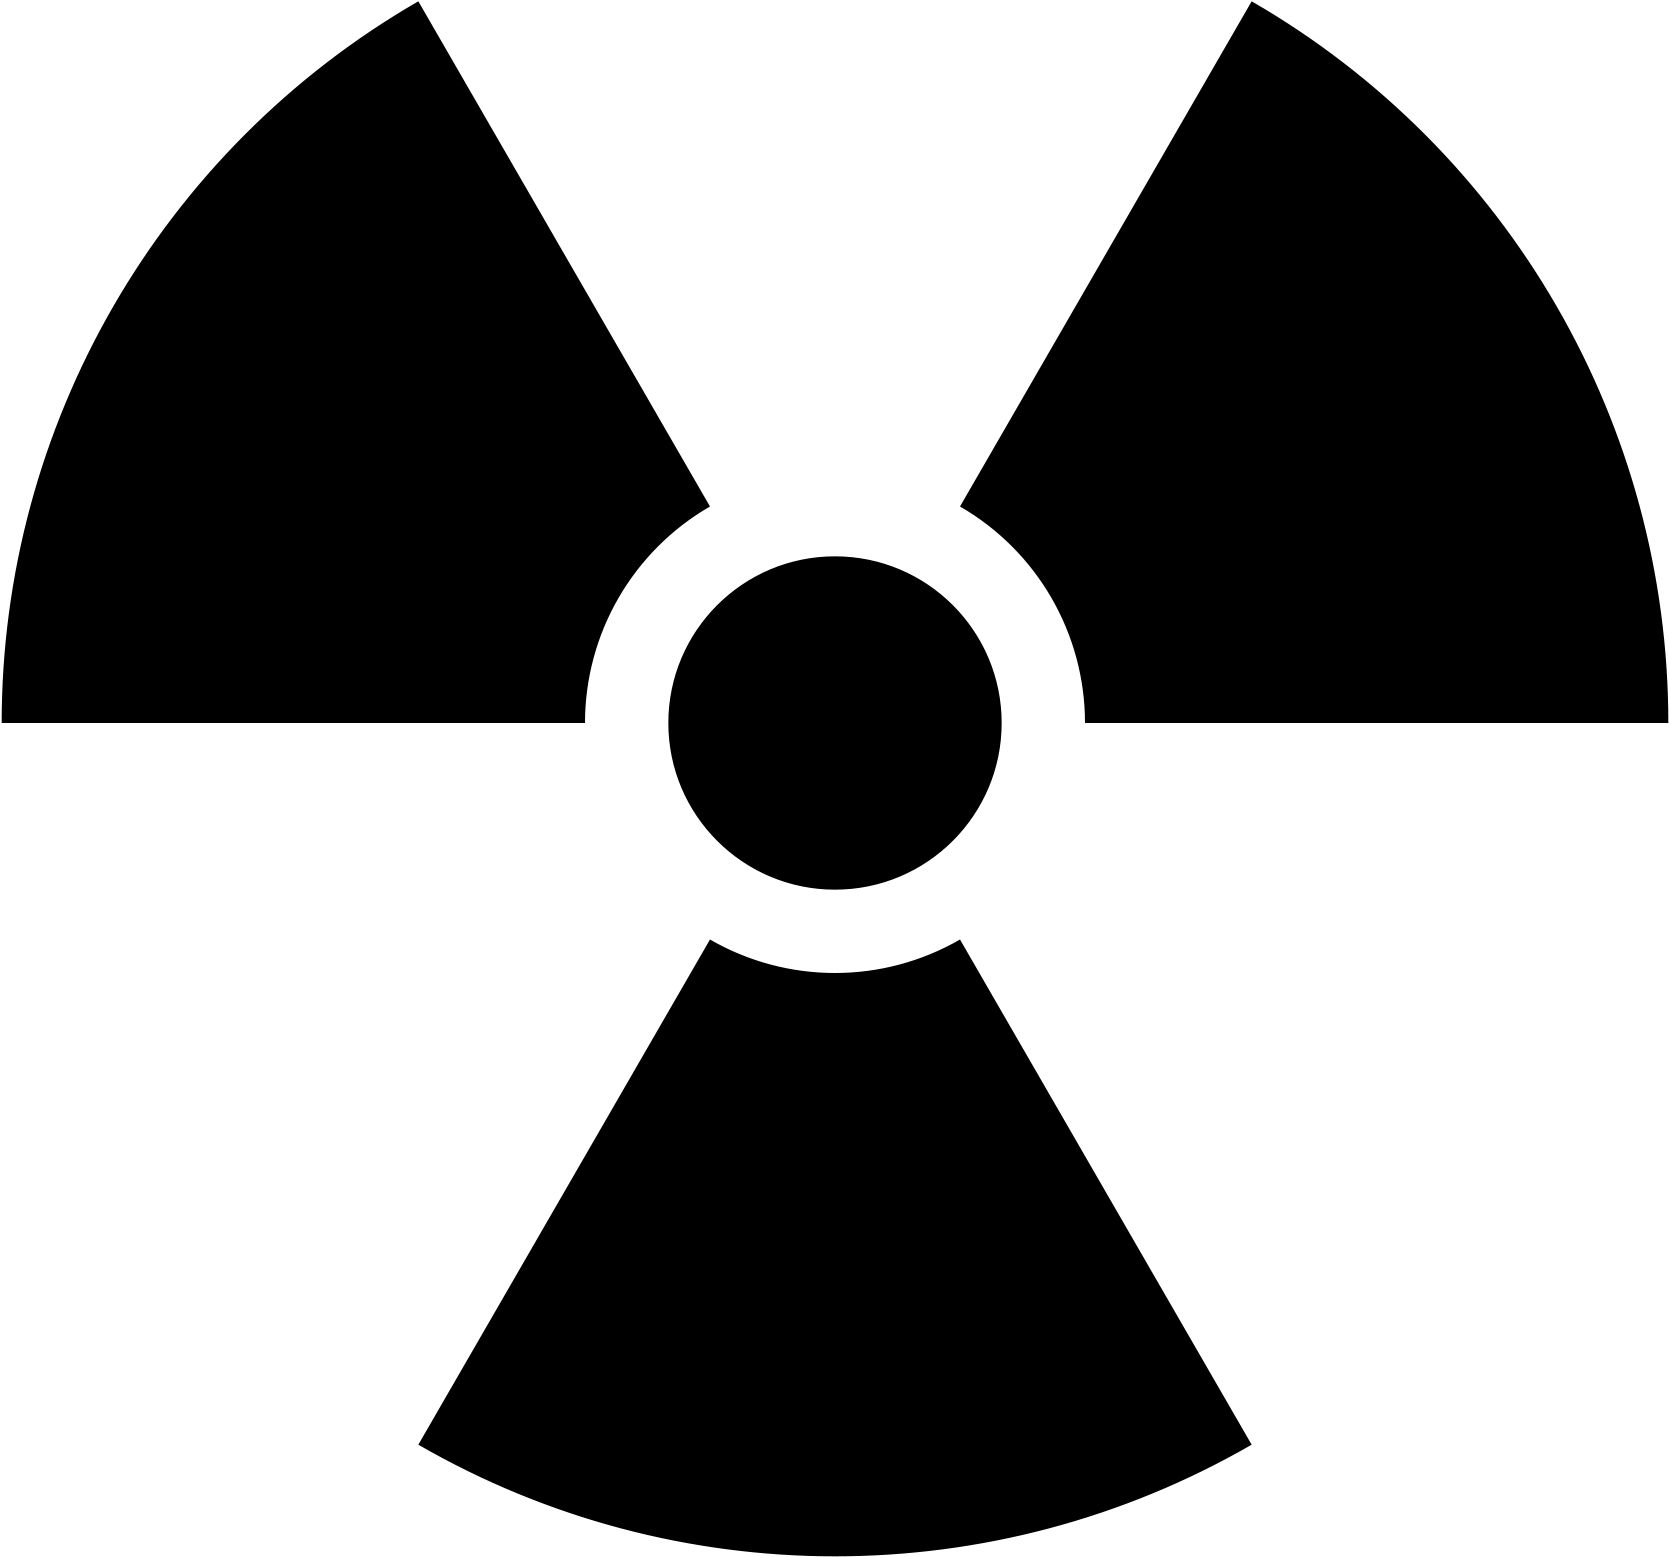 Radiation Warning Symbol2 - Radiation Symbol Black And White (2000x2000)